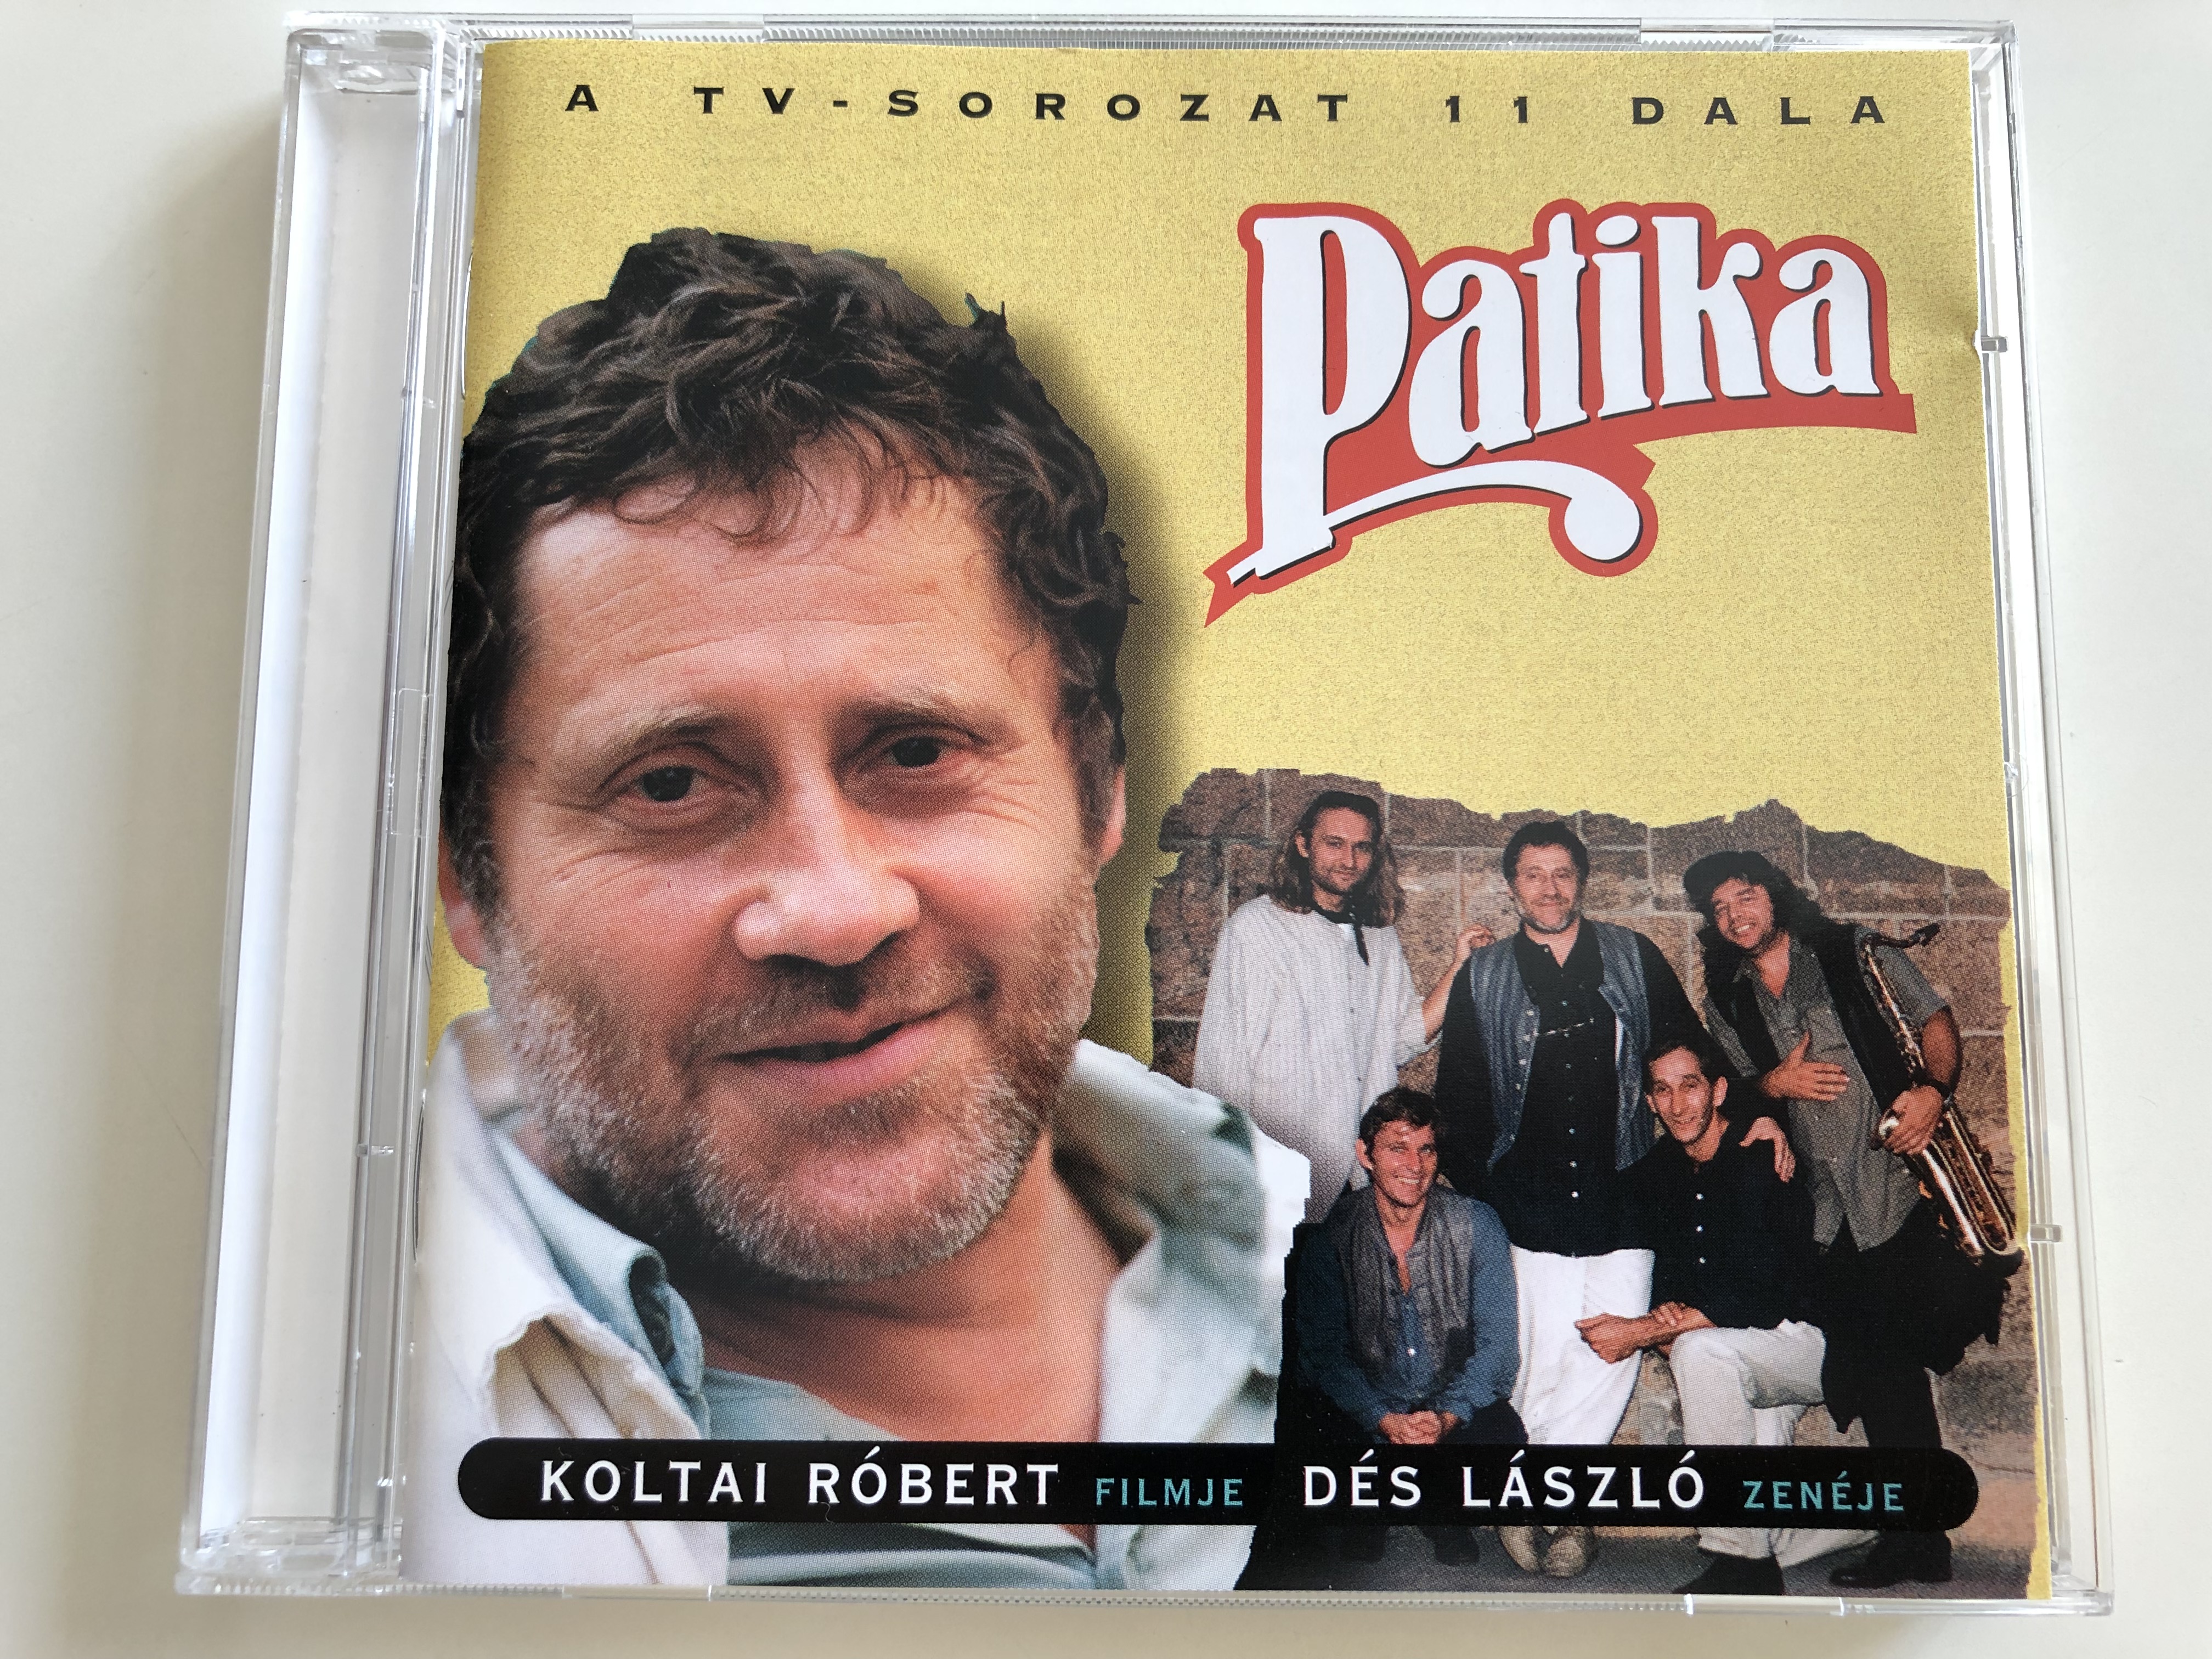 patika-a-tv-sorozat-11-dala-koltai-r-bert-filmje-d-s-l-szl-zen-je-audio-cd-1994-bmg-ariola-hungary-1-.jpg